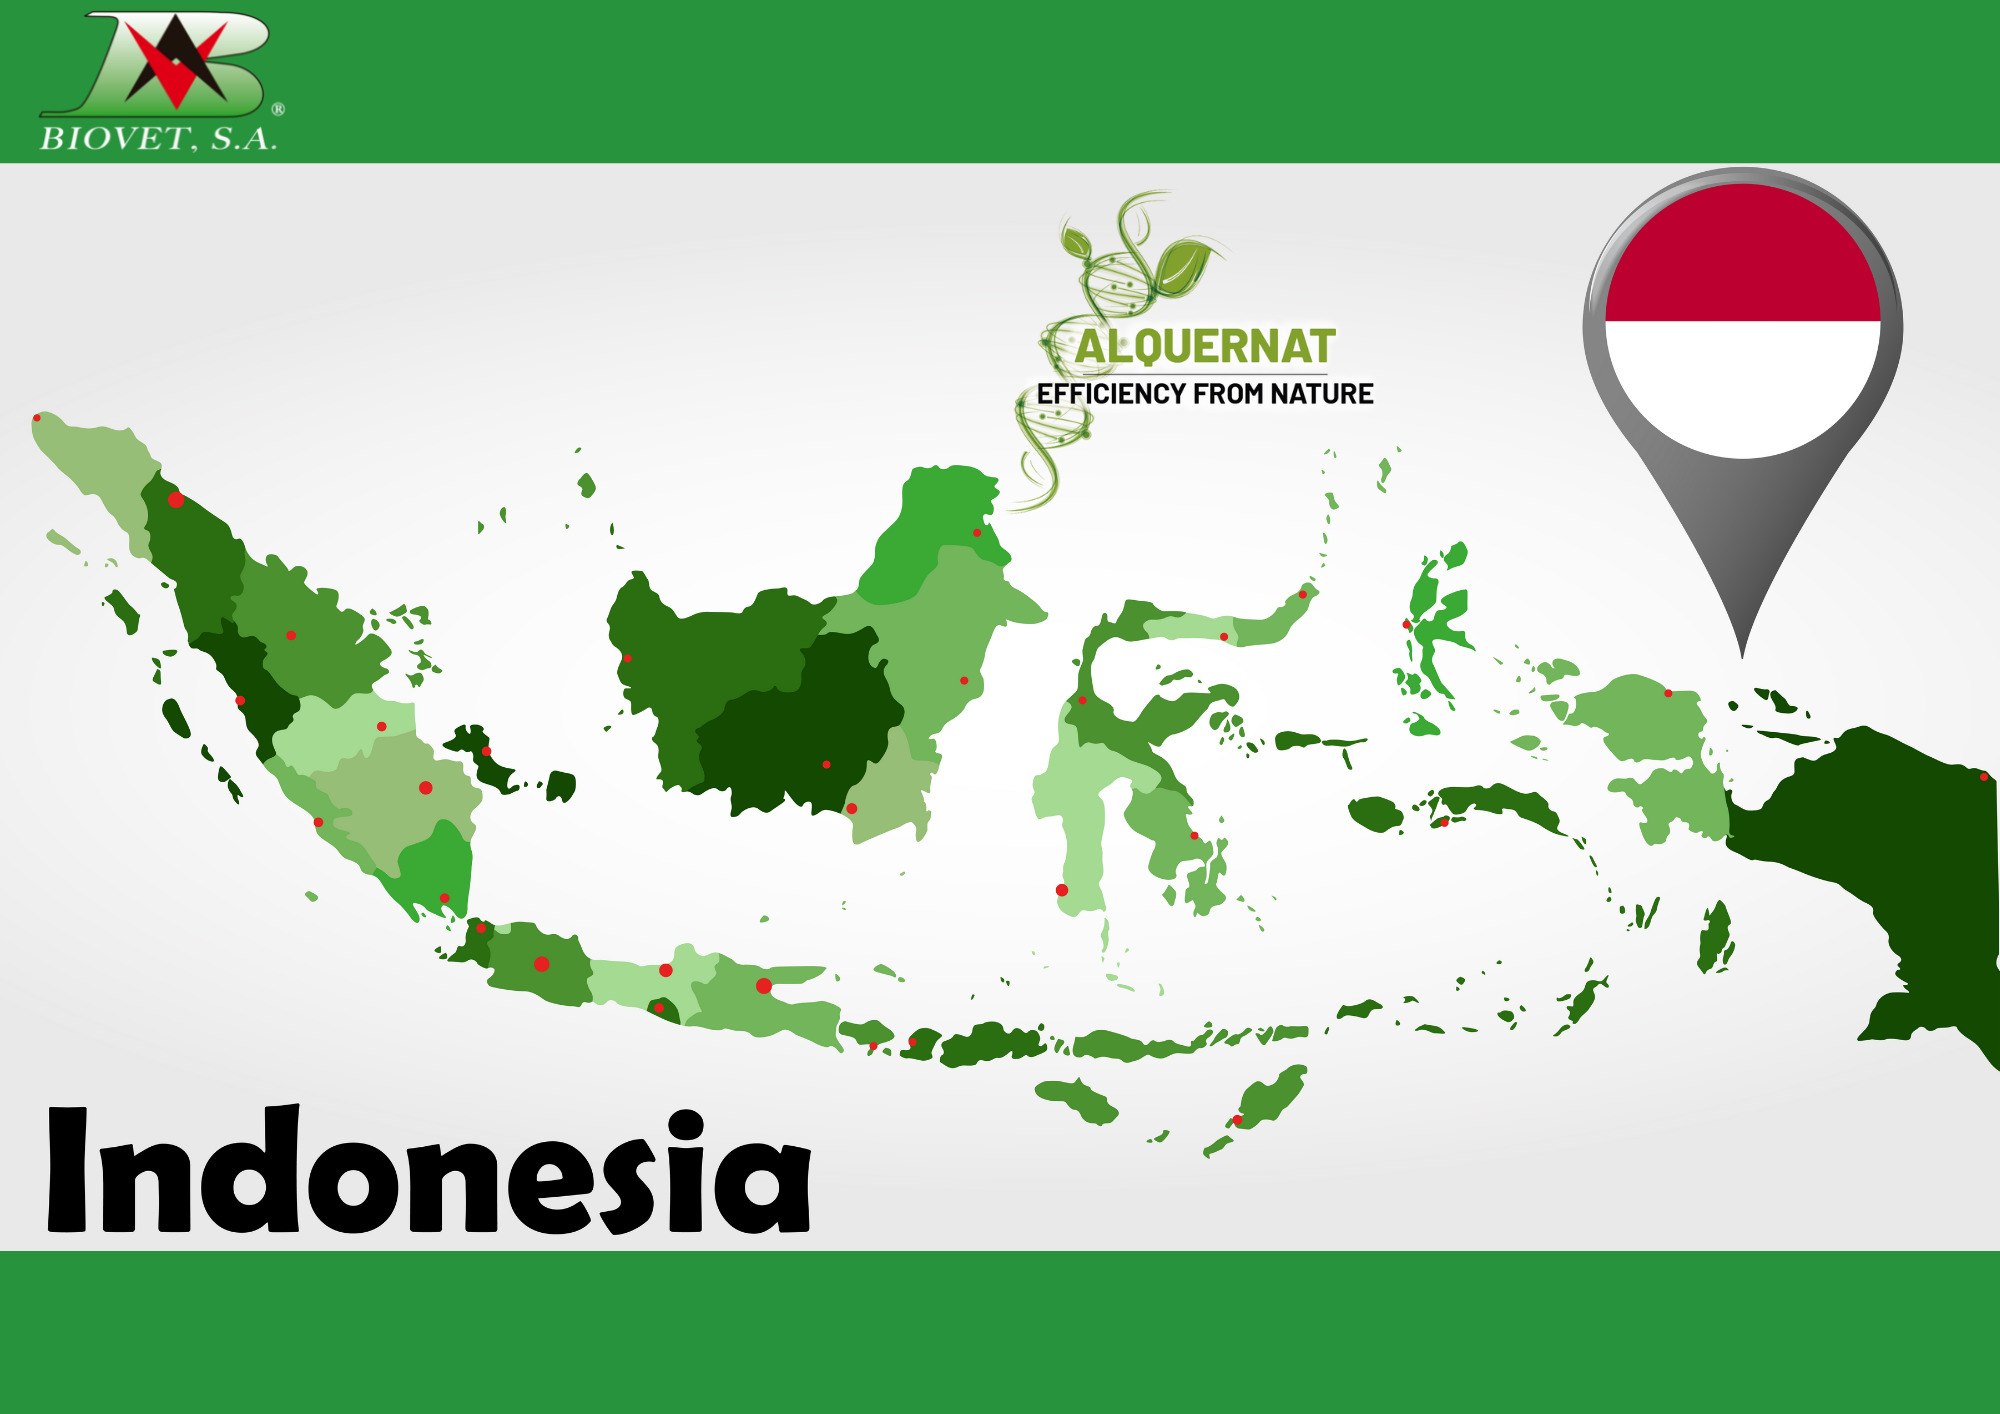 Alquernat trademark registered in Indonesia